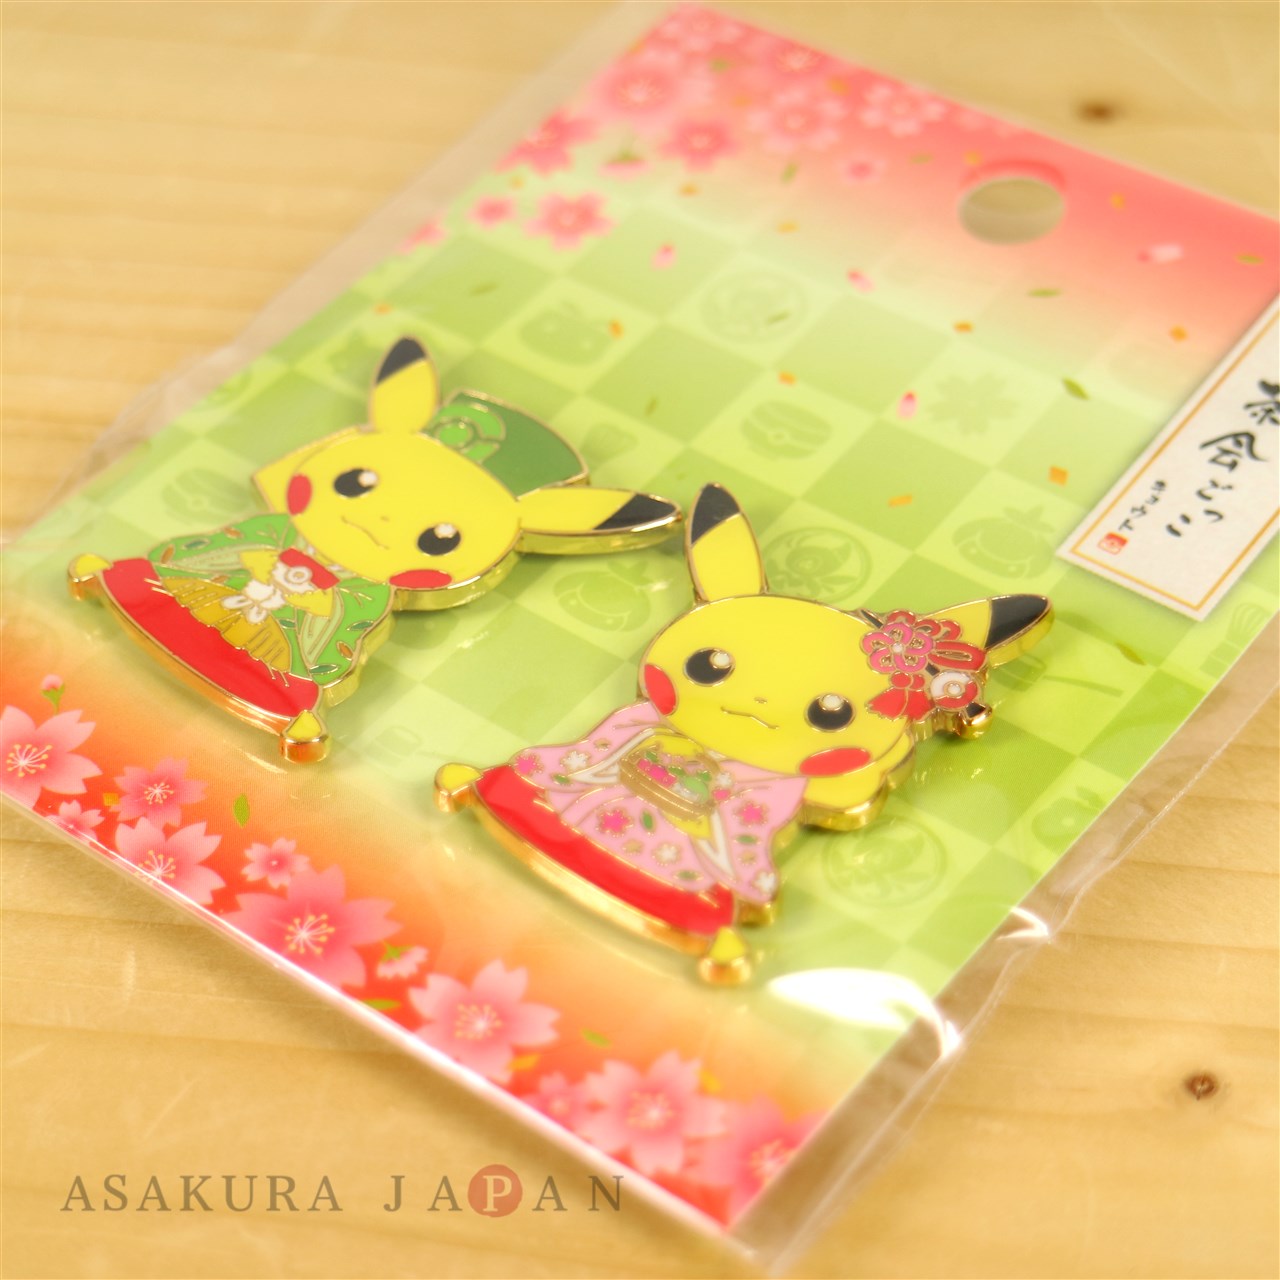 Pokemon Center Kyoto 2019 Renewal Open Japanese tea party Pikachu